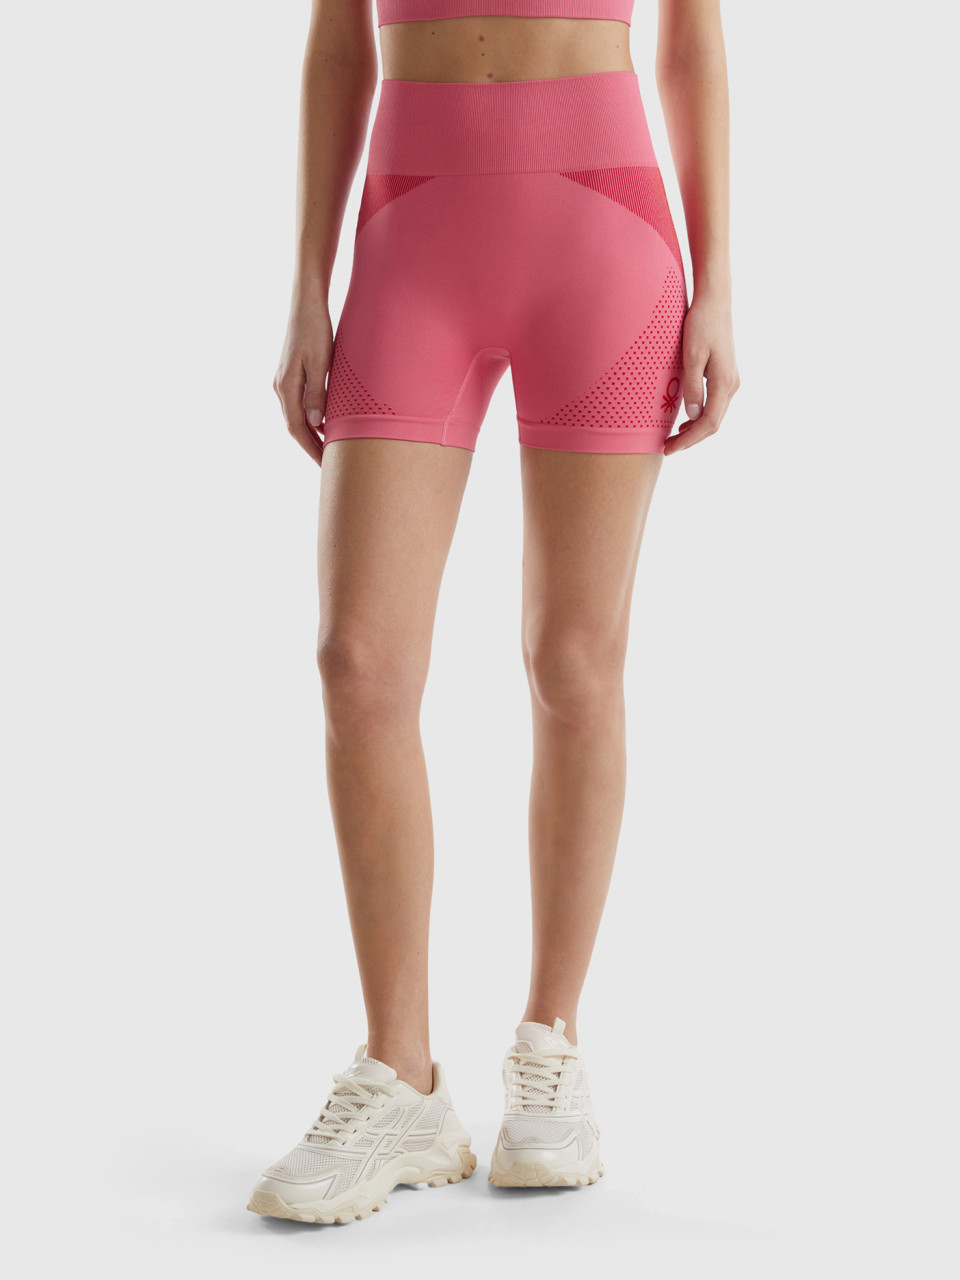 Benetton, Seamless Sports Shorts, Pink, Women